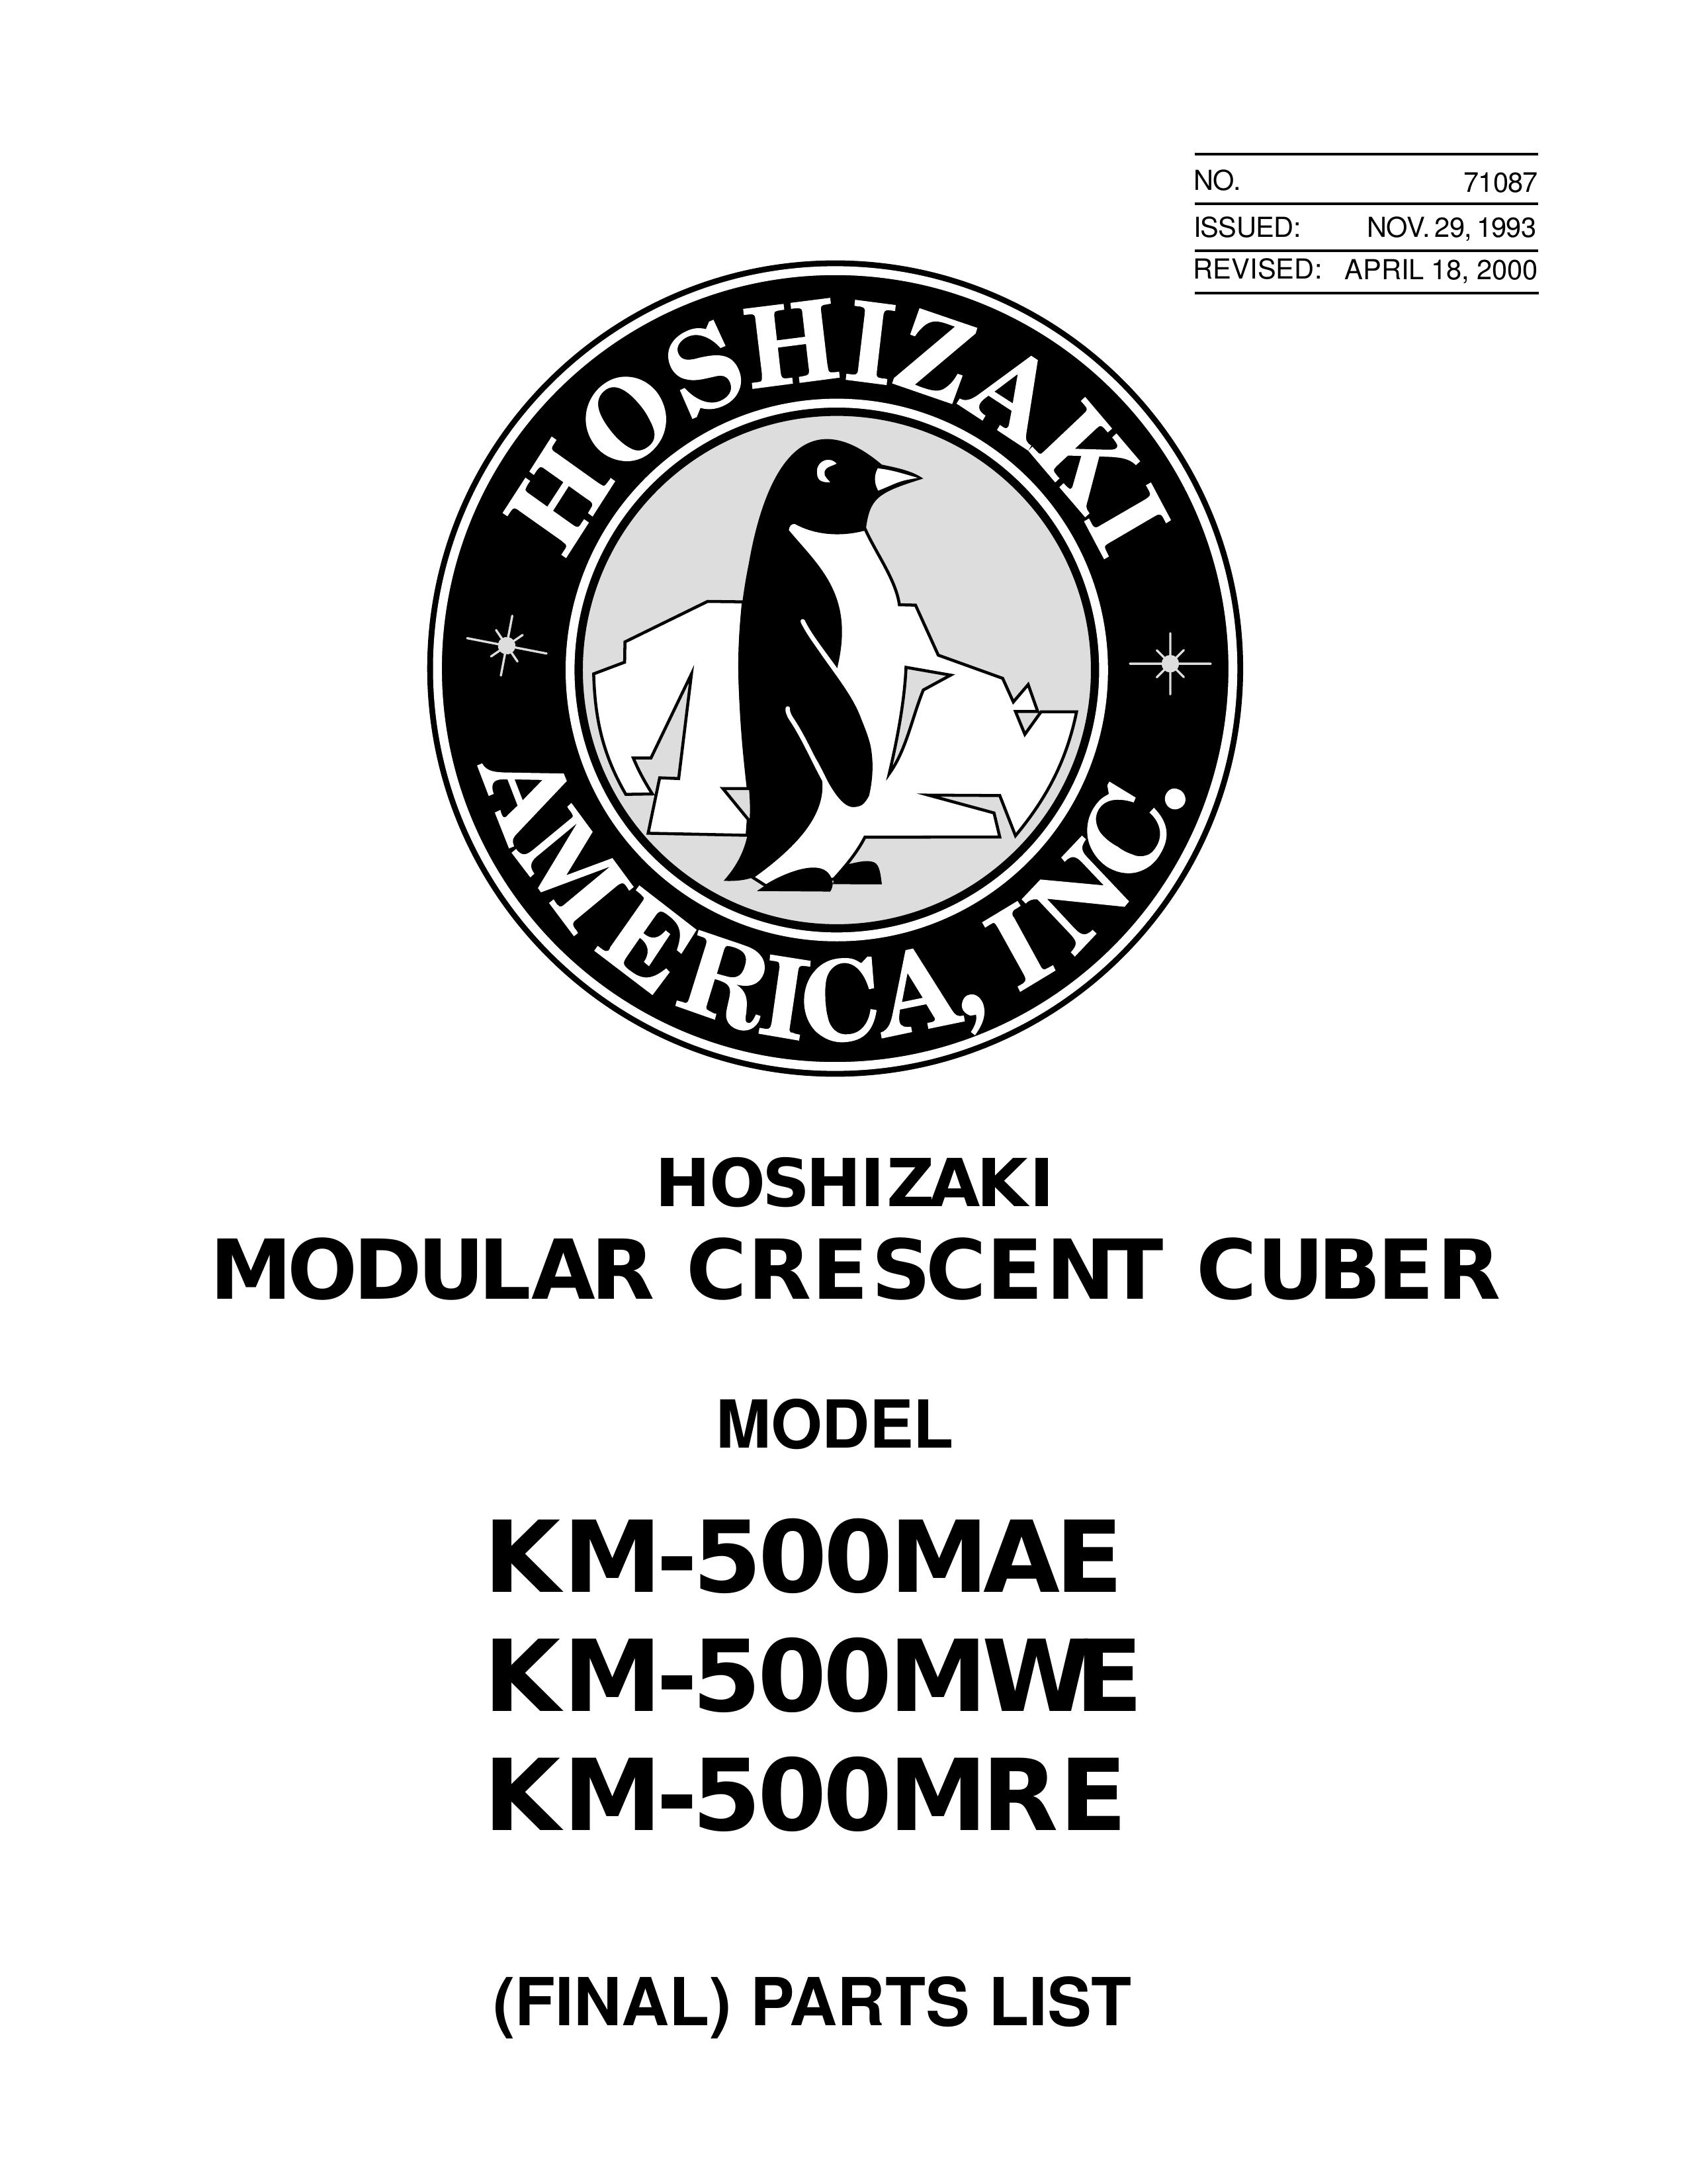 Hoshizaki KM-500MRE Scuba Diving Equipment User Manual